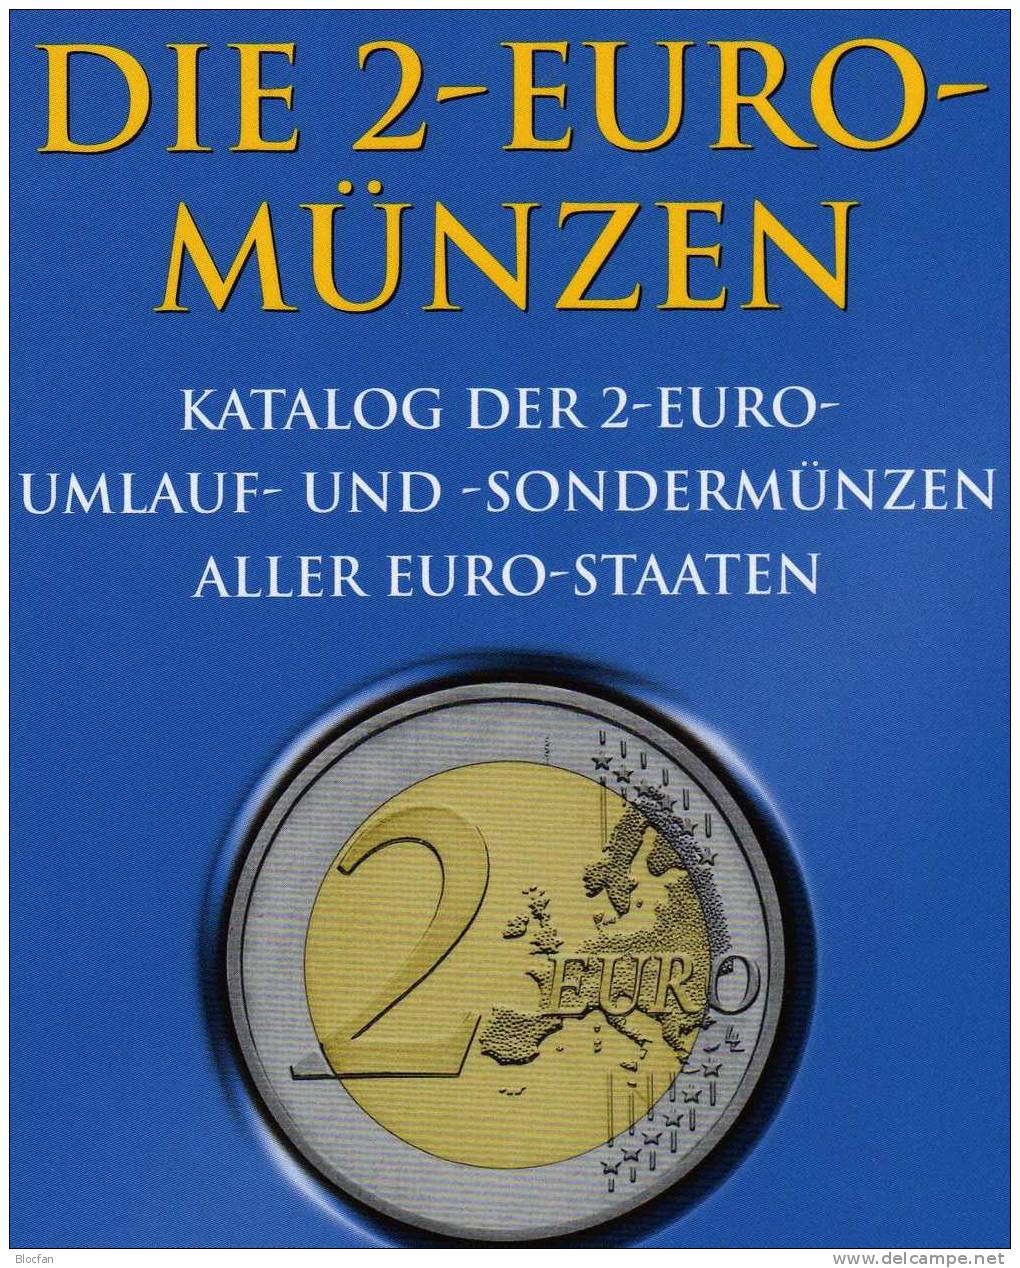 2 EURO Münz Katalog 2010 Aller EU-Länder Neu 10€ Auch Für Numisbriefe Numis/coins Catalogue Of Germany - Belgium